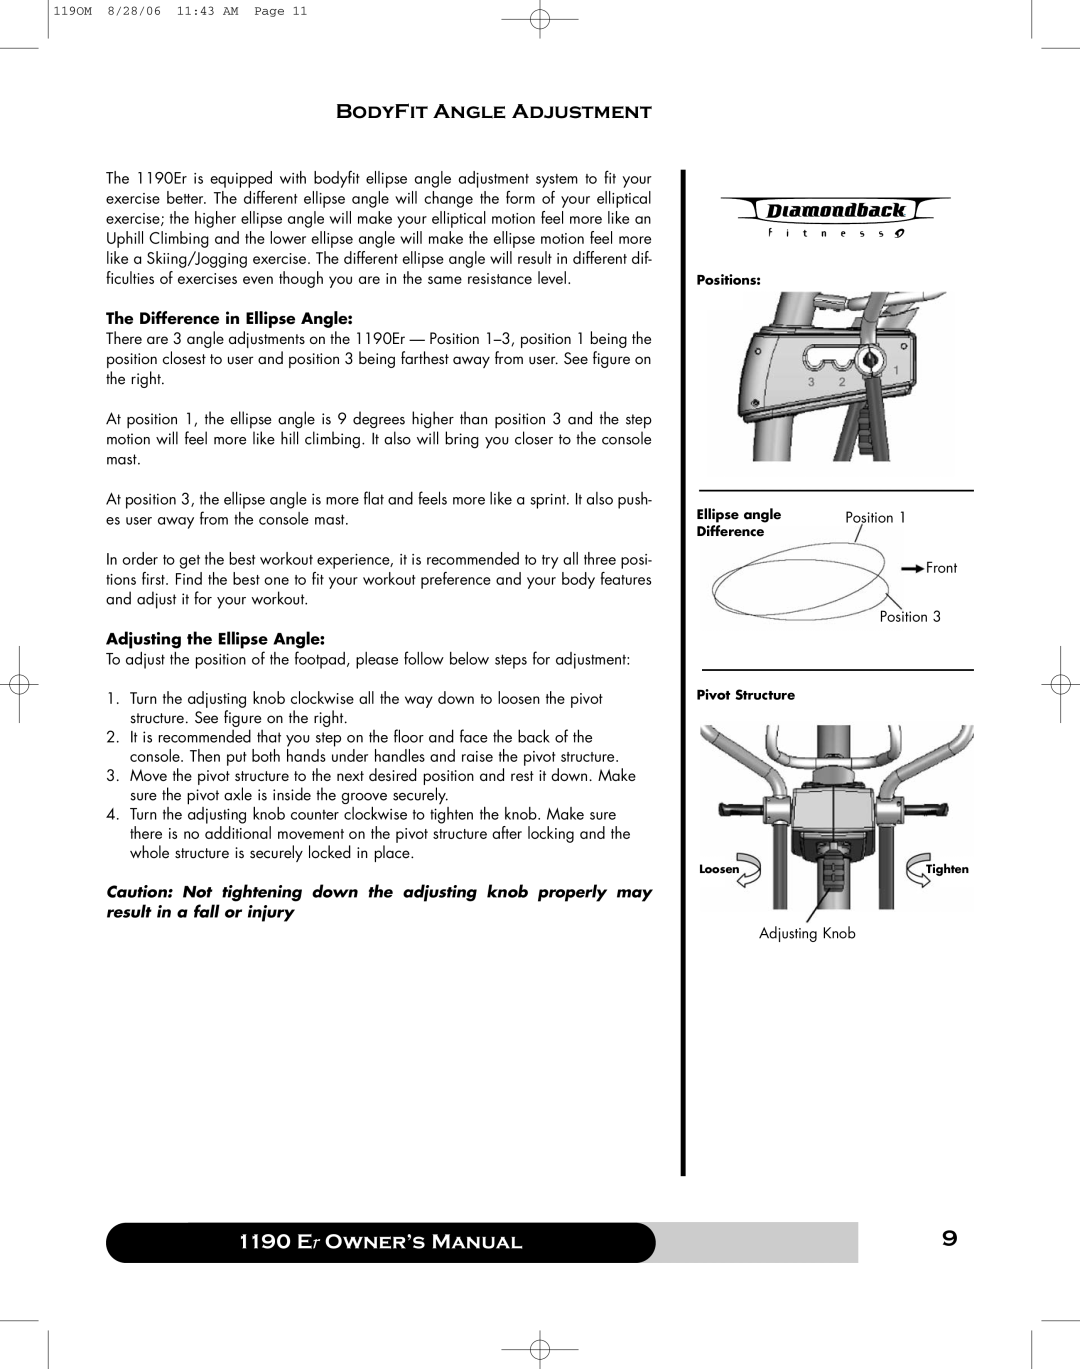 Diamondback 1190 Er manual BodyFit Angle Adjustment, Er Owner’s Manual, The Difference in Ellipse Angle 